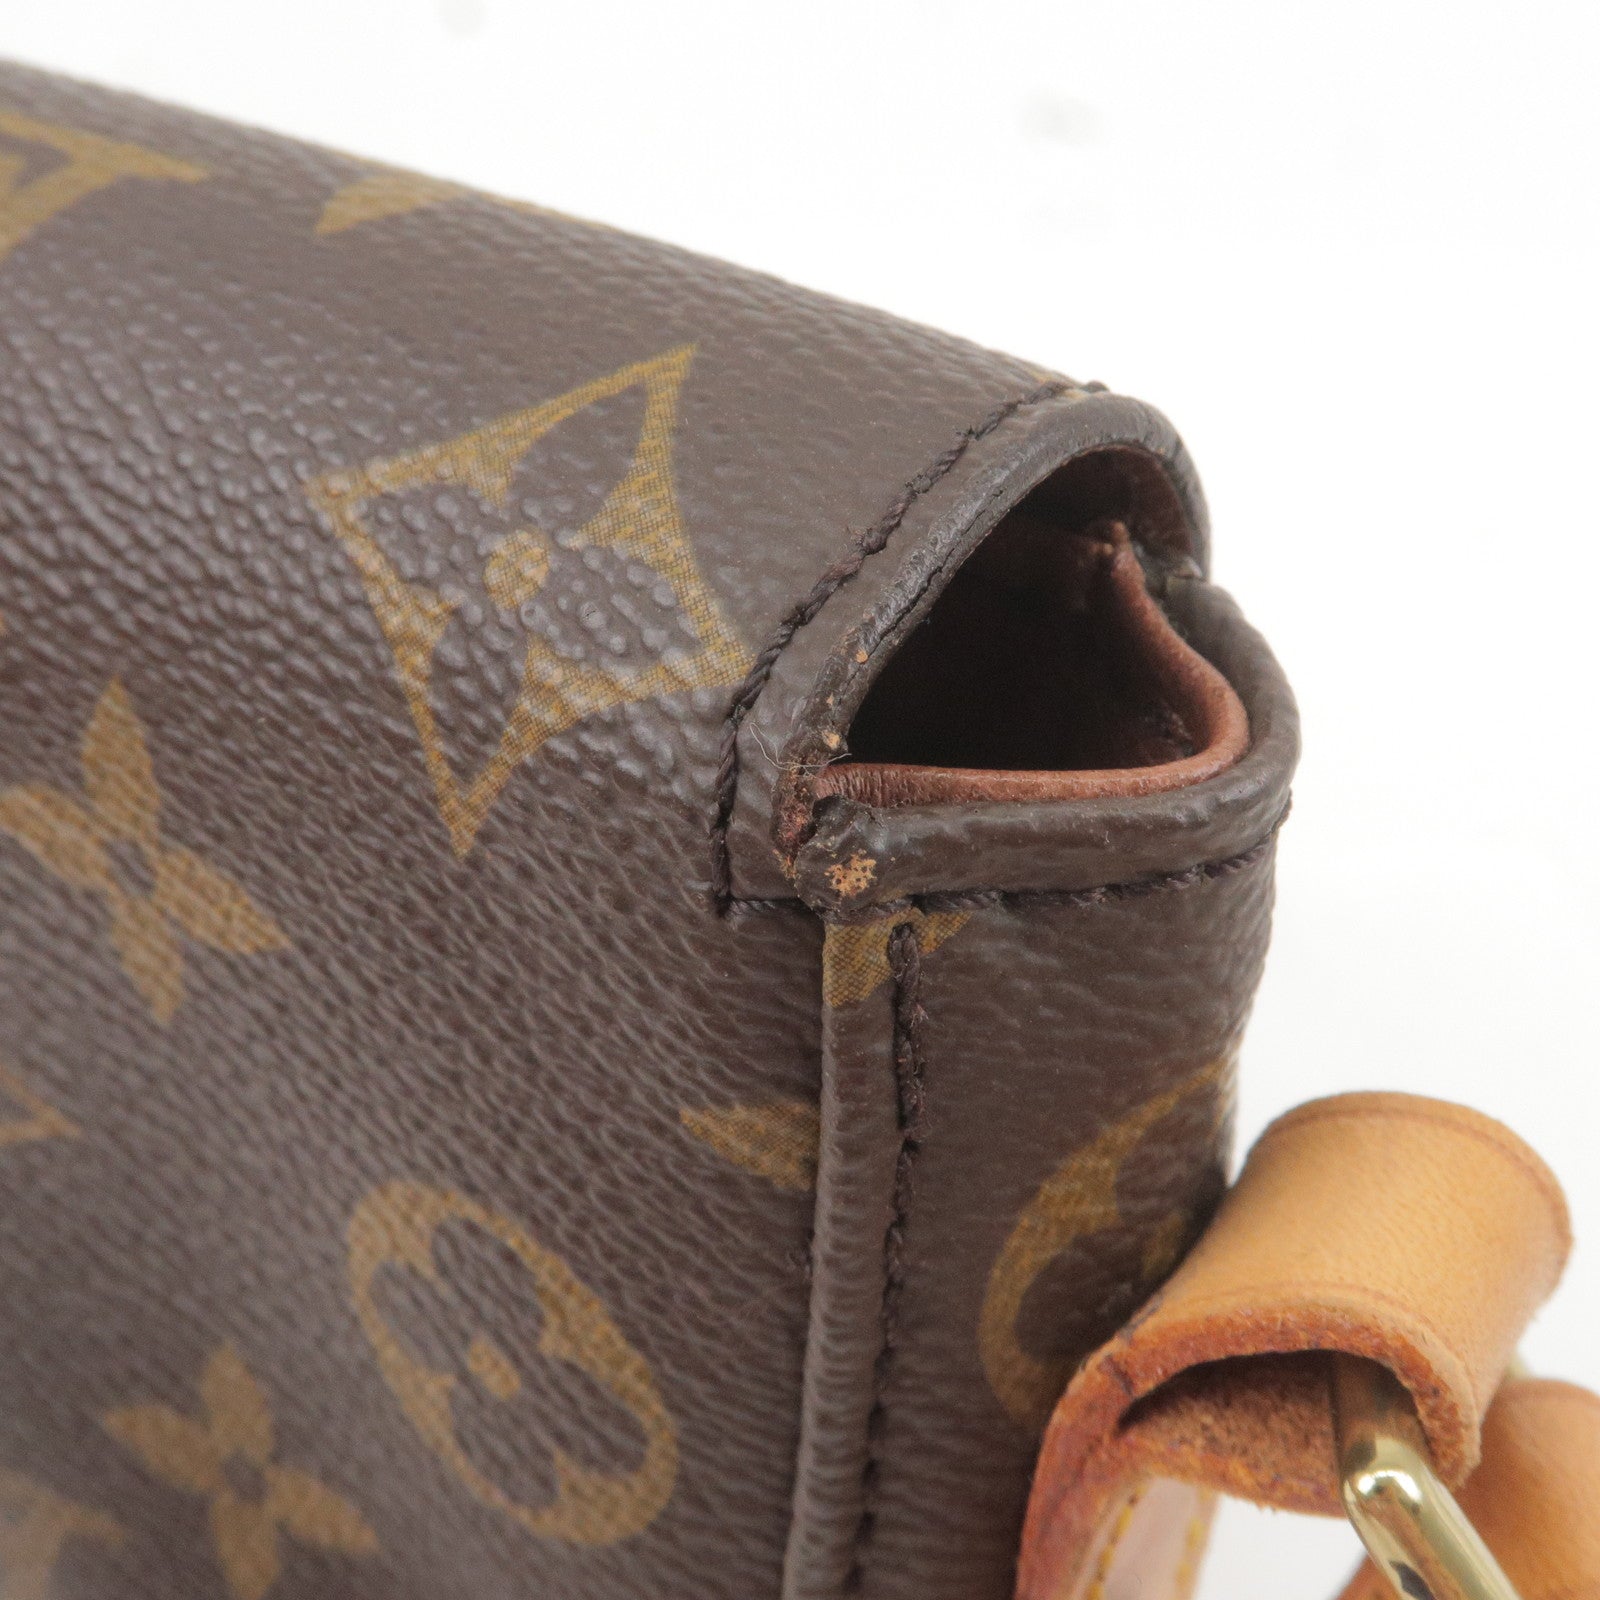 Louis Vuitton Virgil Abloh ss19 LV Initial Key Chain Ring Bag Charm